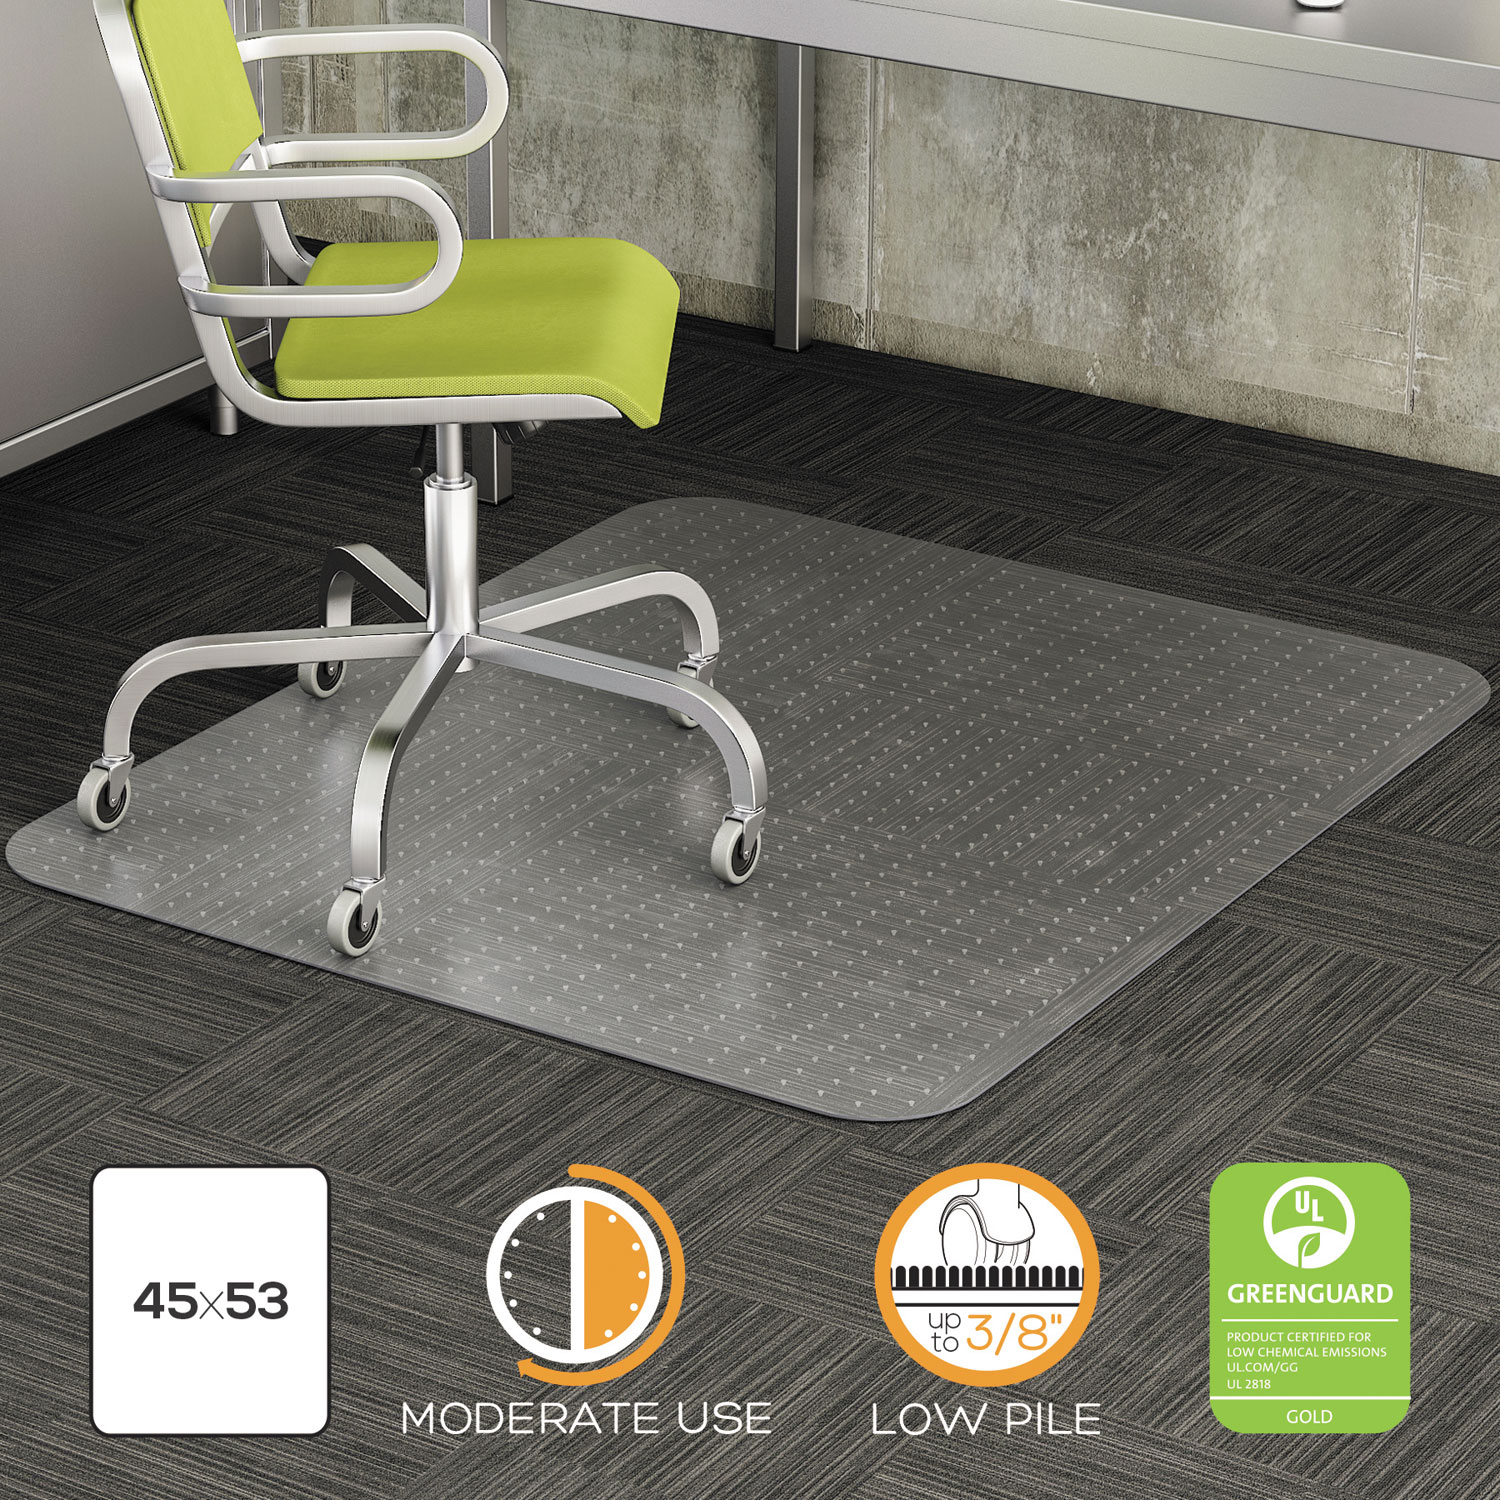  deflecto CM13142 DuraMat Moderate Use Chair Mat for Low Pile Carpet, 36 x 48, Rectangular, Clear (DEFCM13142) 